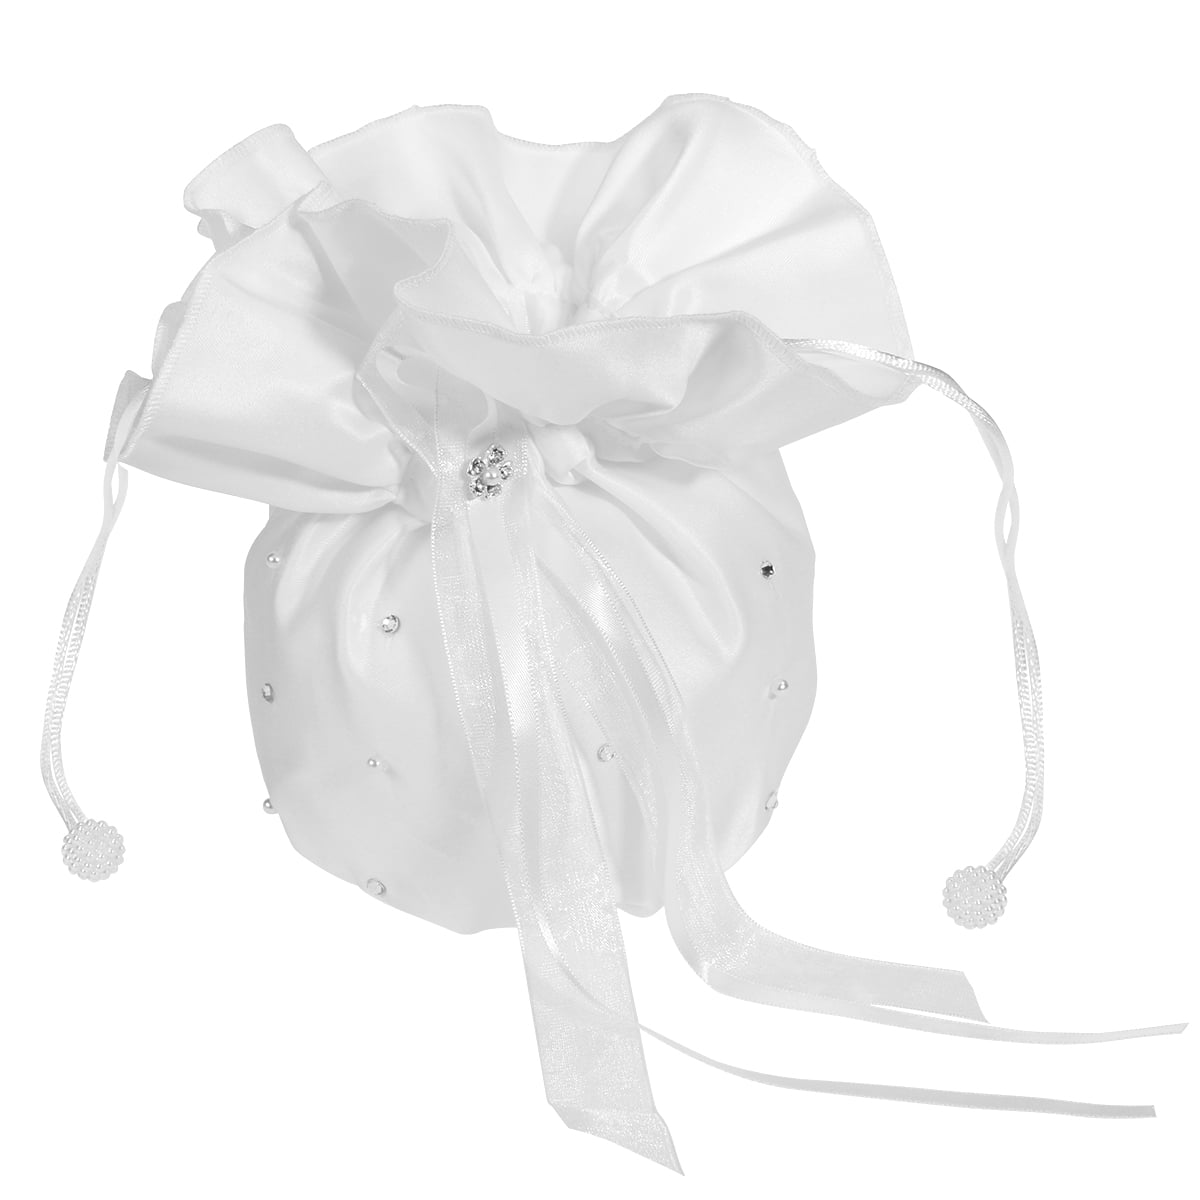 satin dolly bag bridesmaid wedding hand tie hanging hand bag accessory handbag 